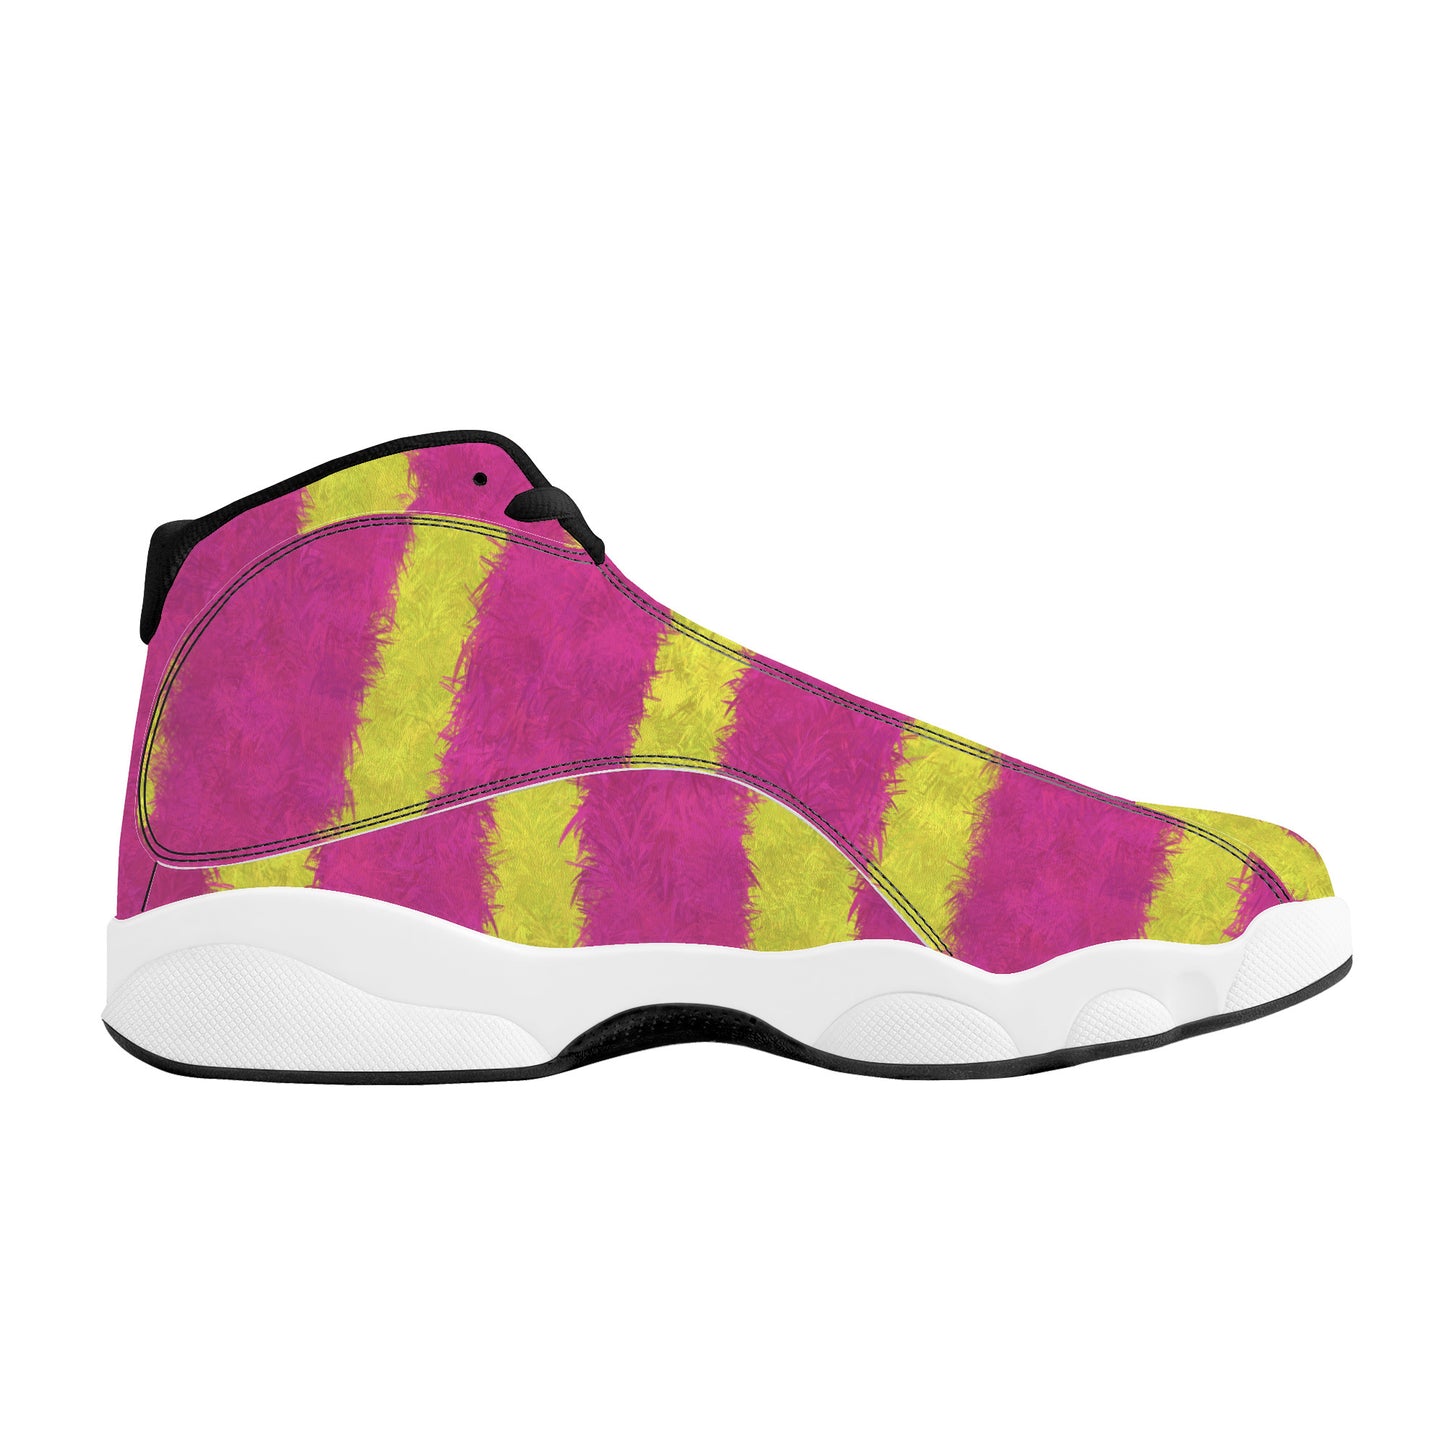 "Plume" Basketball Shoes